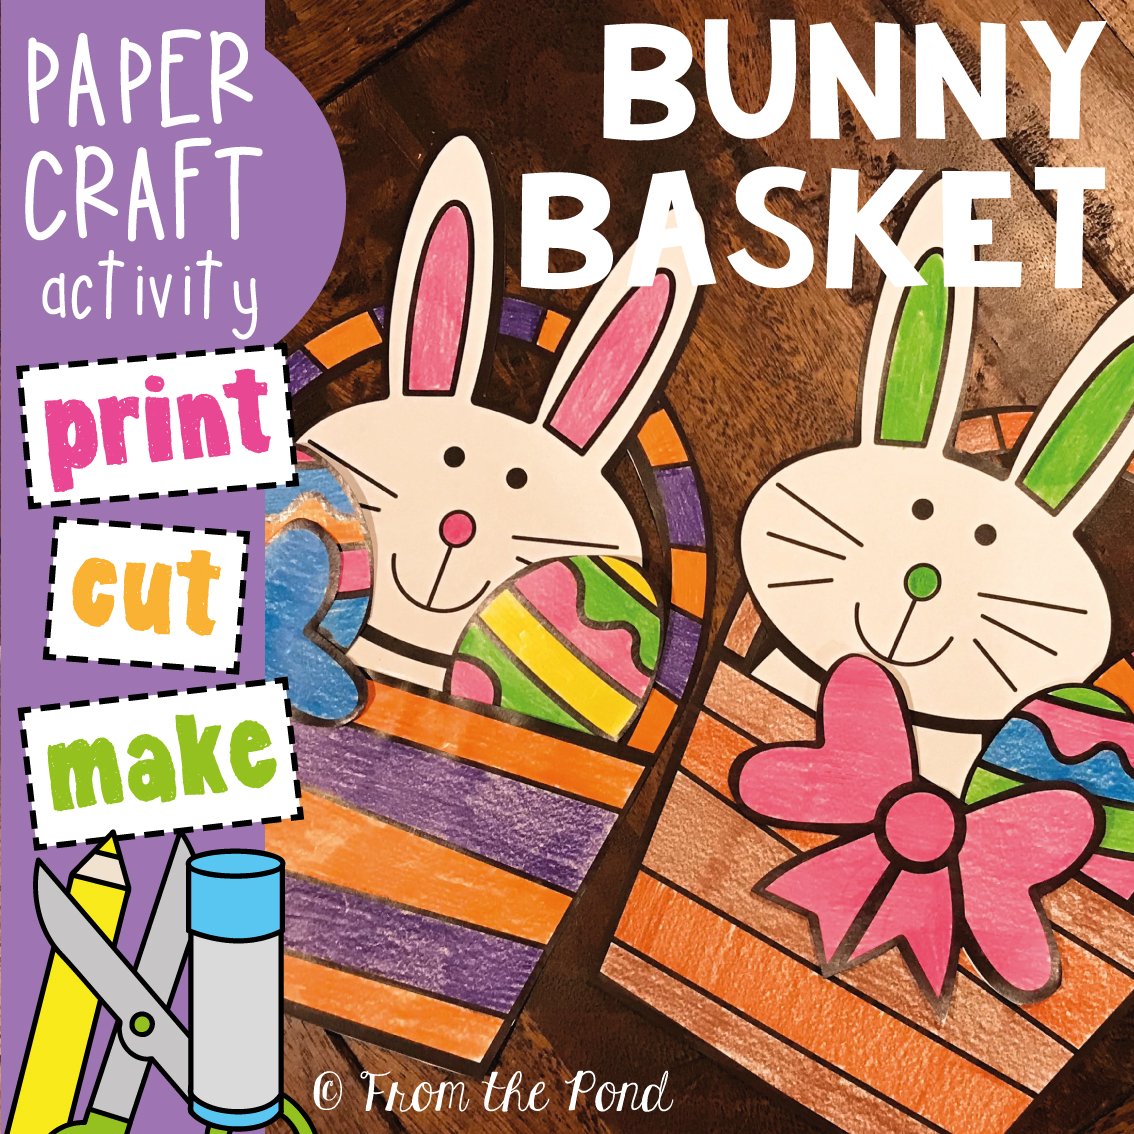 Bunny Basket Craft